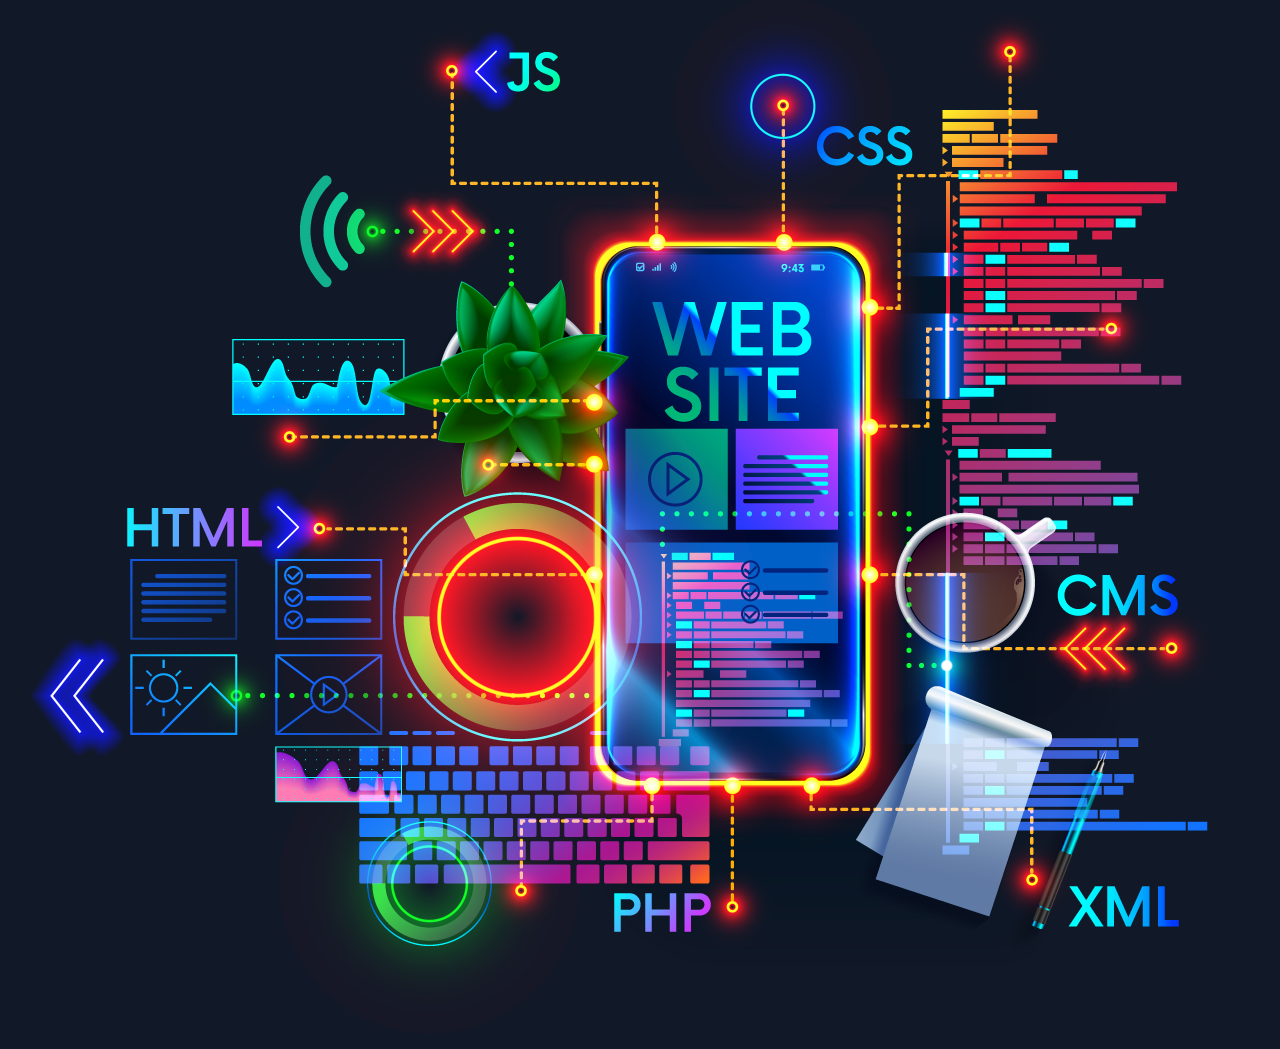 Web development graphic